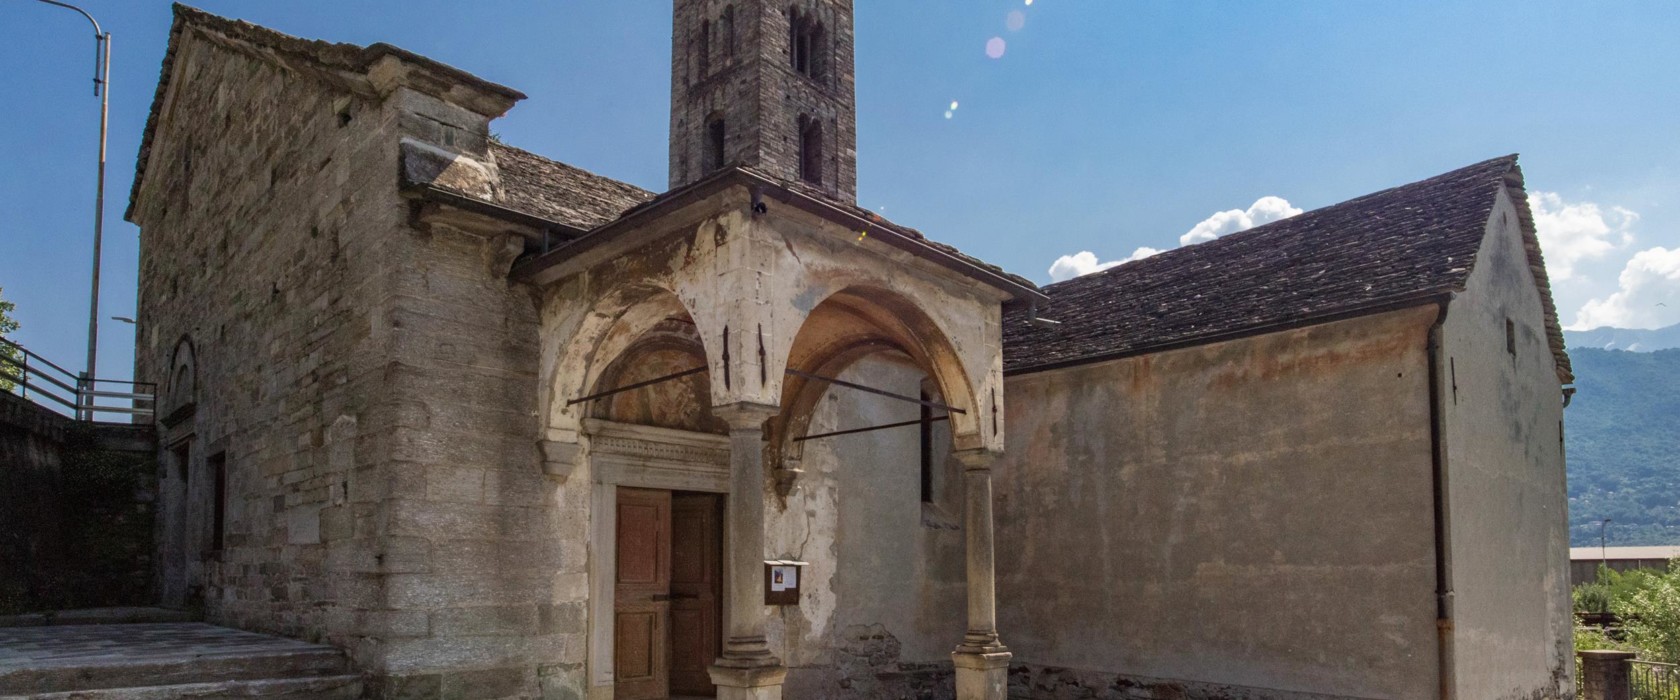 The church of San Bartolomeo in Villadossola